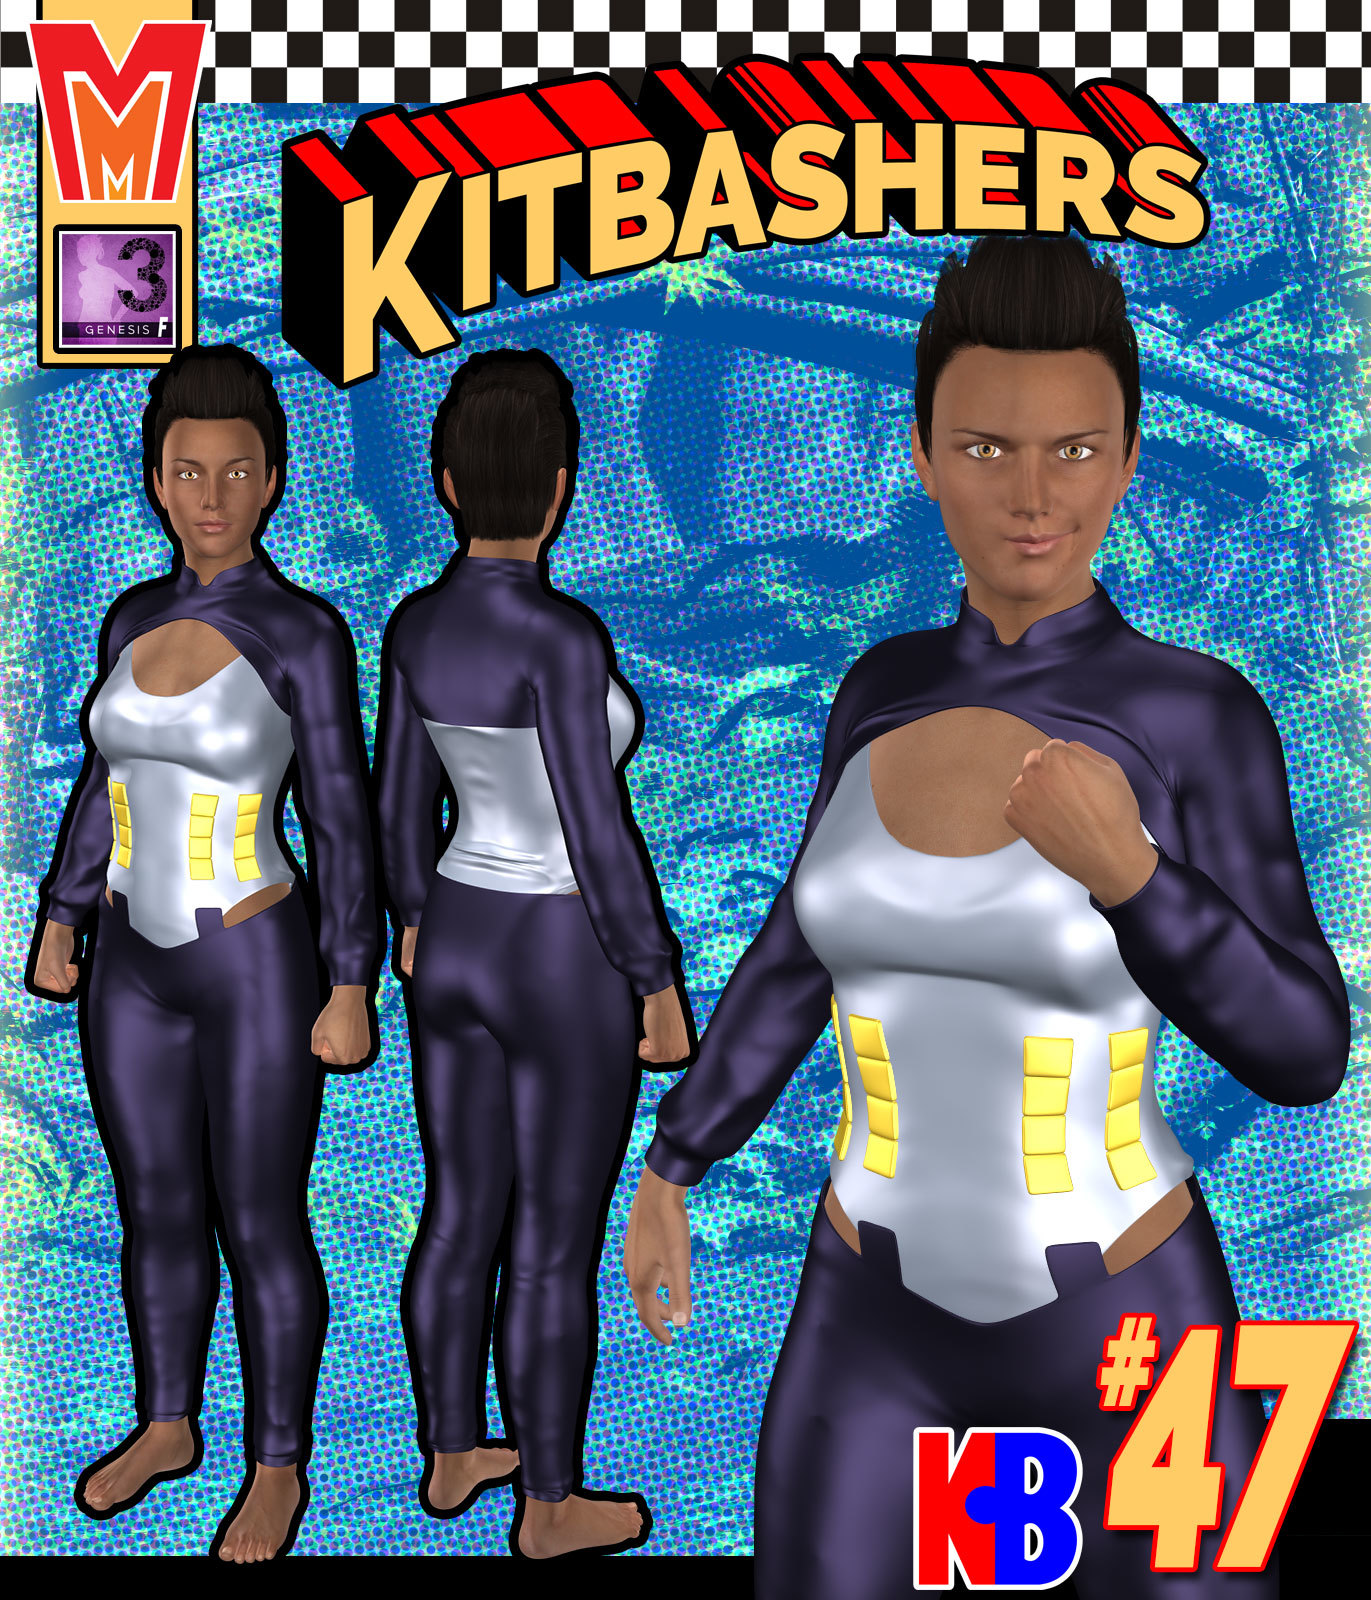 Kitbashers 047 MMG3F by: MightyMite, 3D Models by Daz 3D